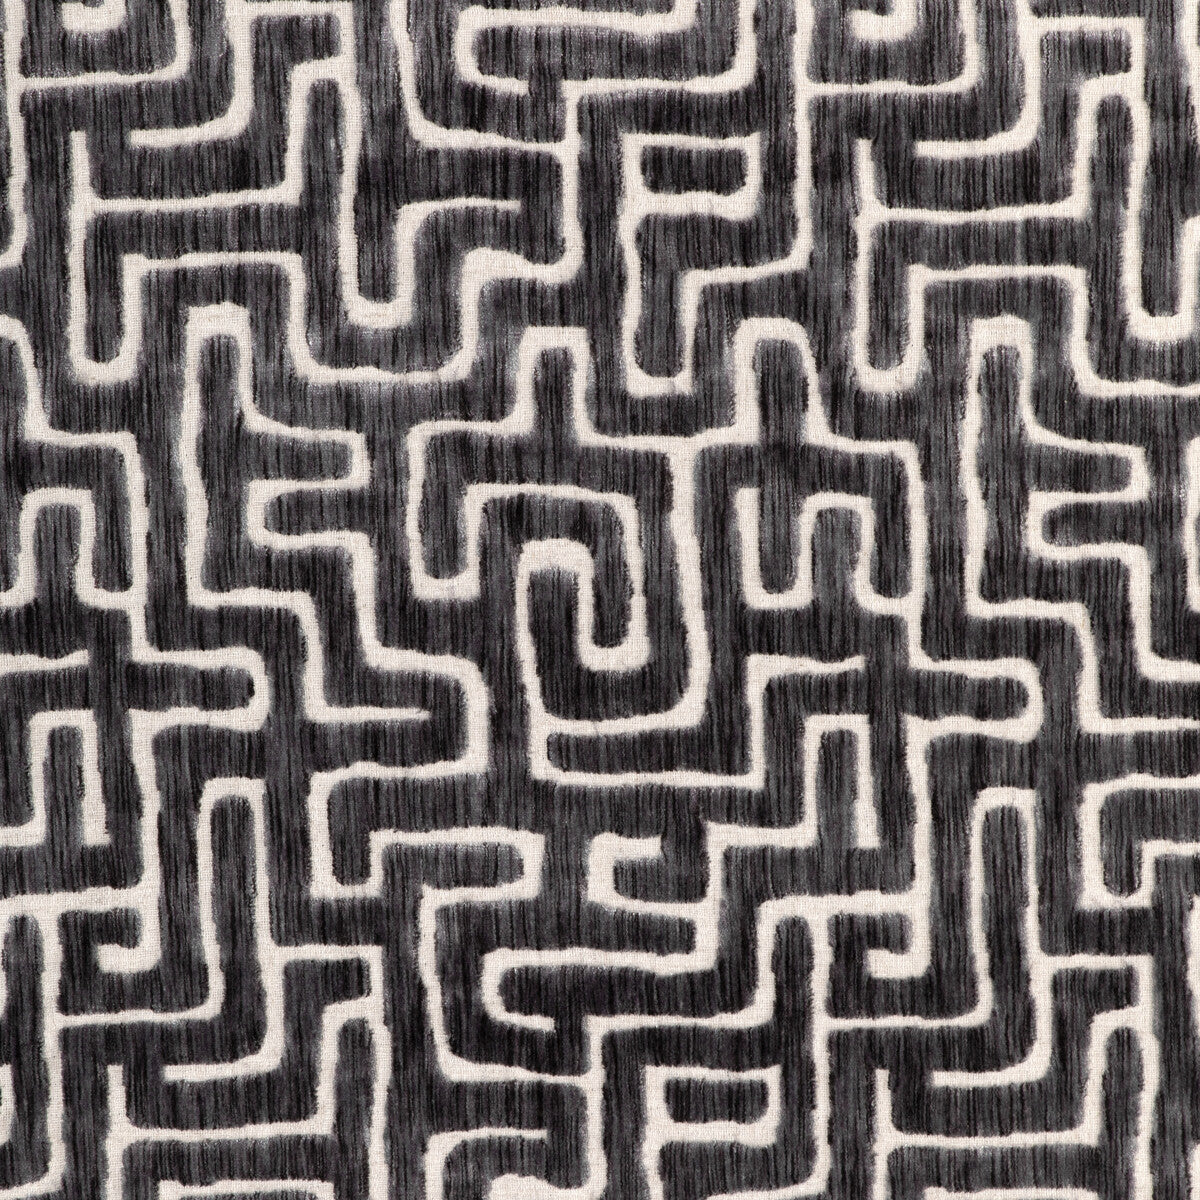 Kravet Design fabric in 35721-11 color - pattern 35721.11.0 - by Kravet Design in the Modern Velvets collection